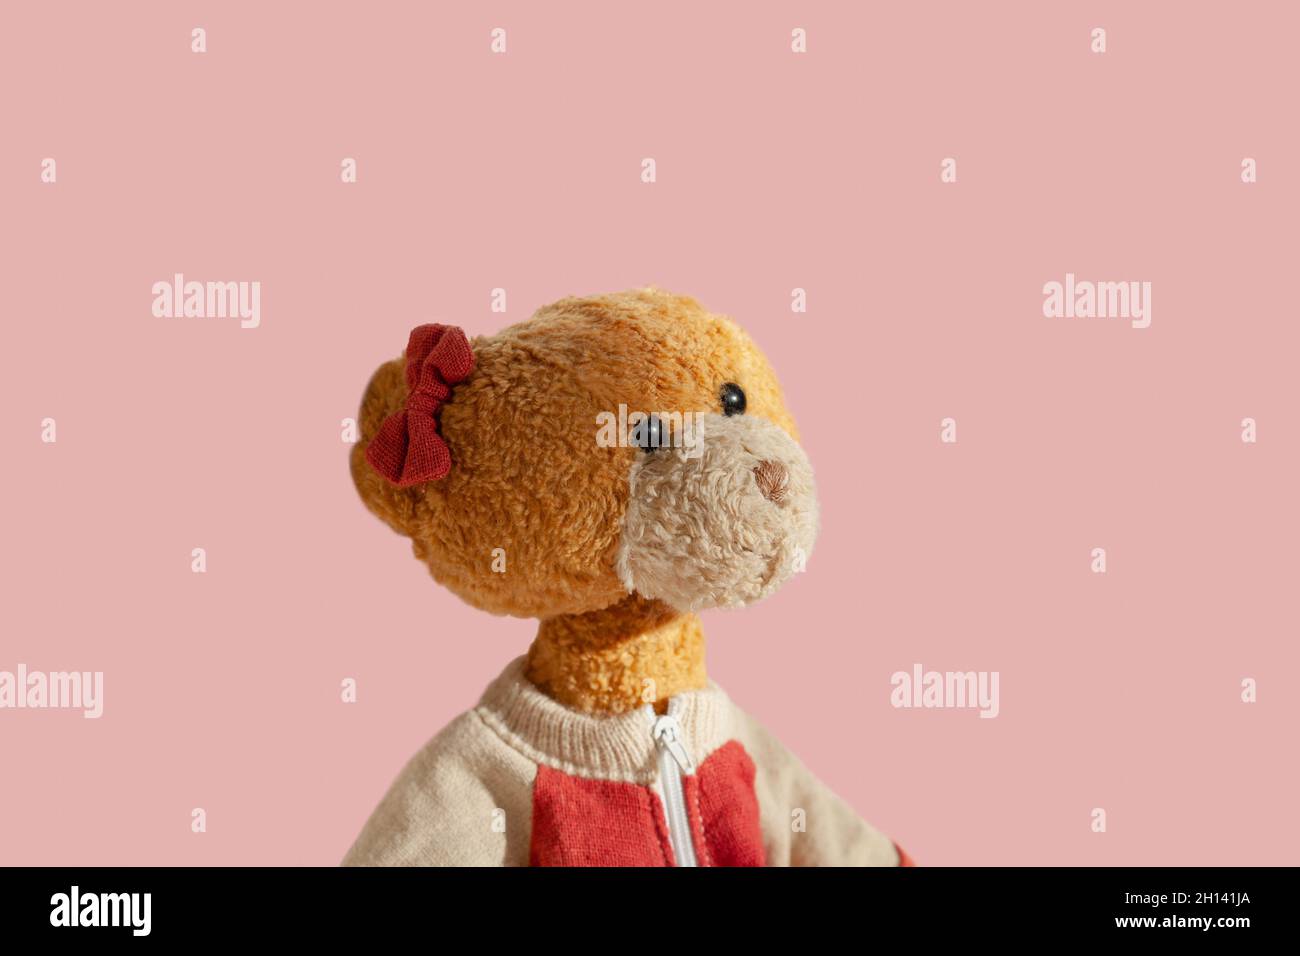 Retrato de niña vintage osito de peluche mirando hacia arriba, soñando.  Arco rojo. Aislado sobre fondo rosa claro. Espacio vacío para texto  Fotografía de stock - Alamy